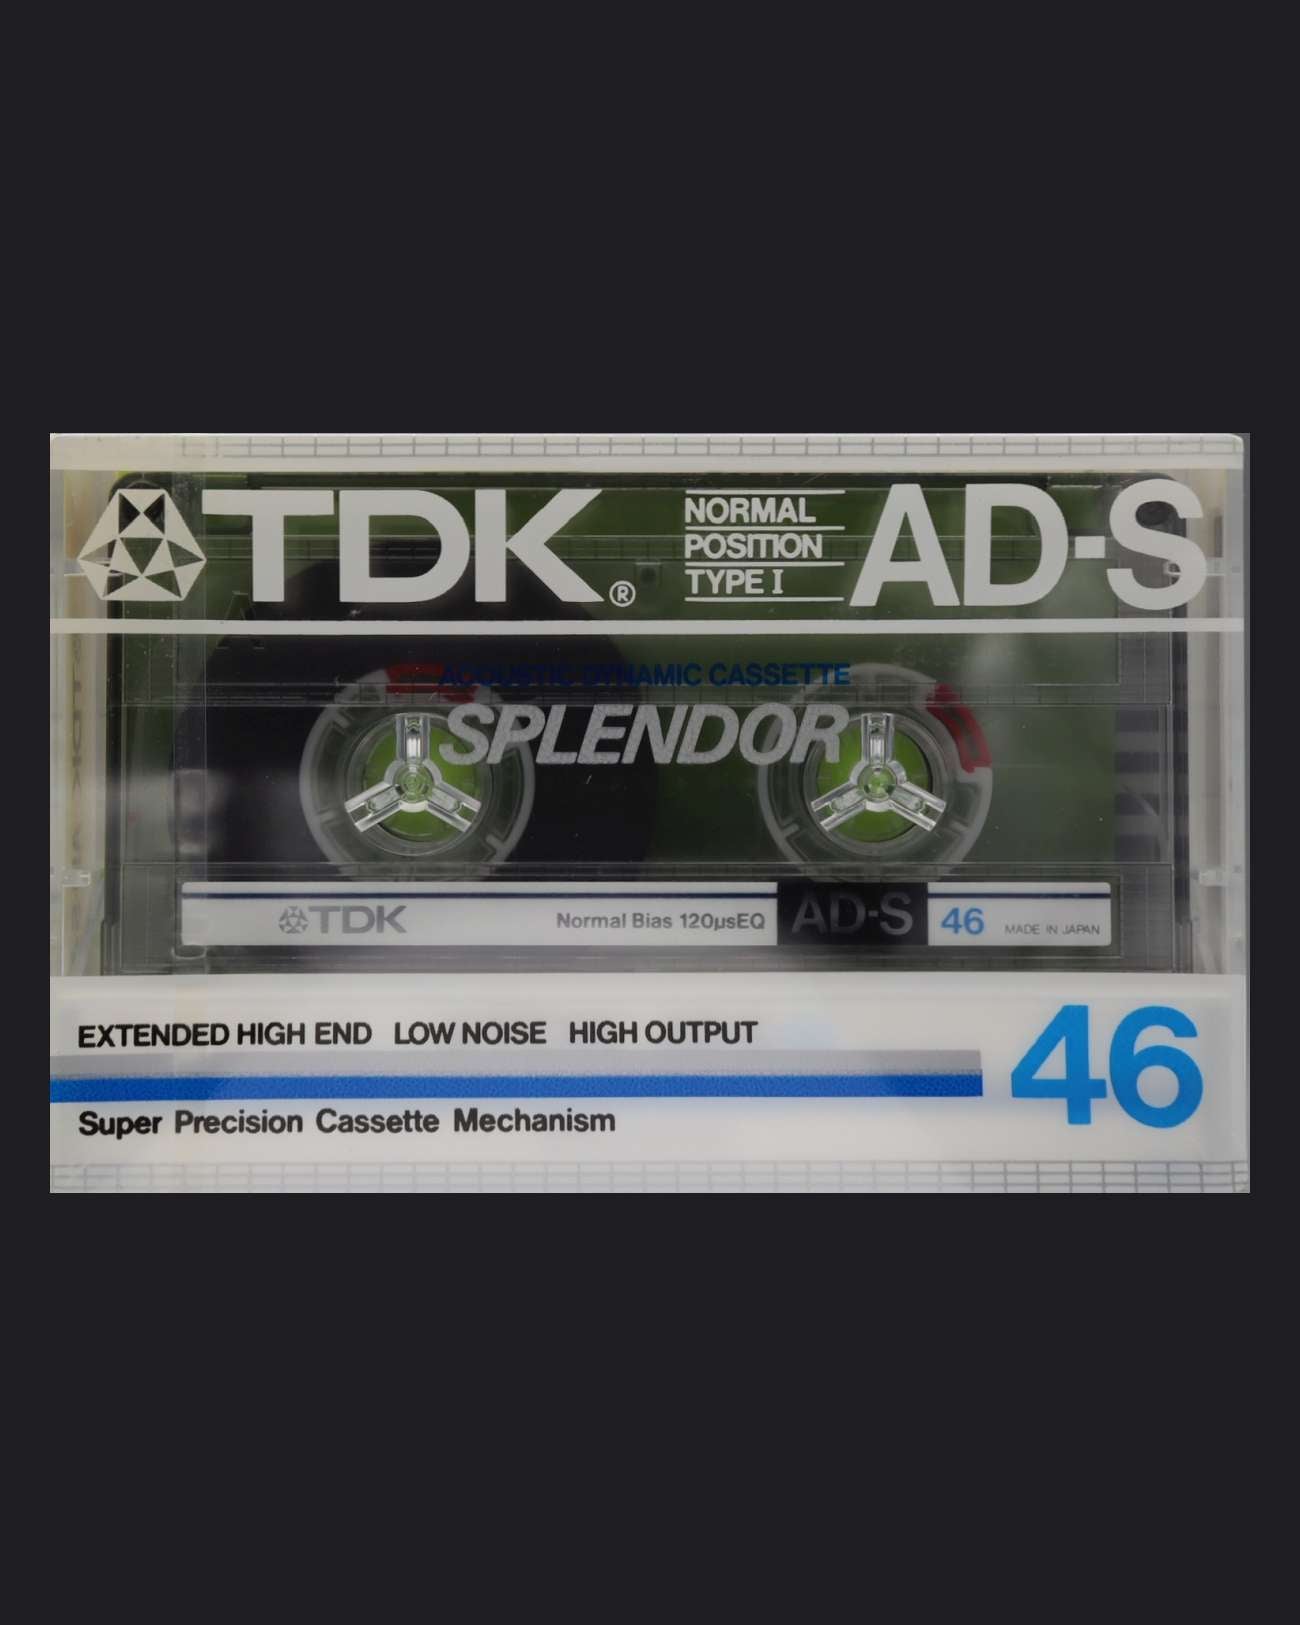 TDK AD-S (1986 JP)